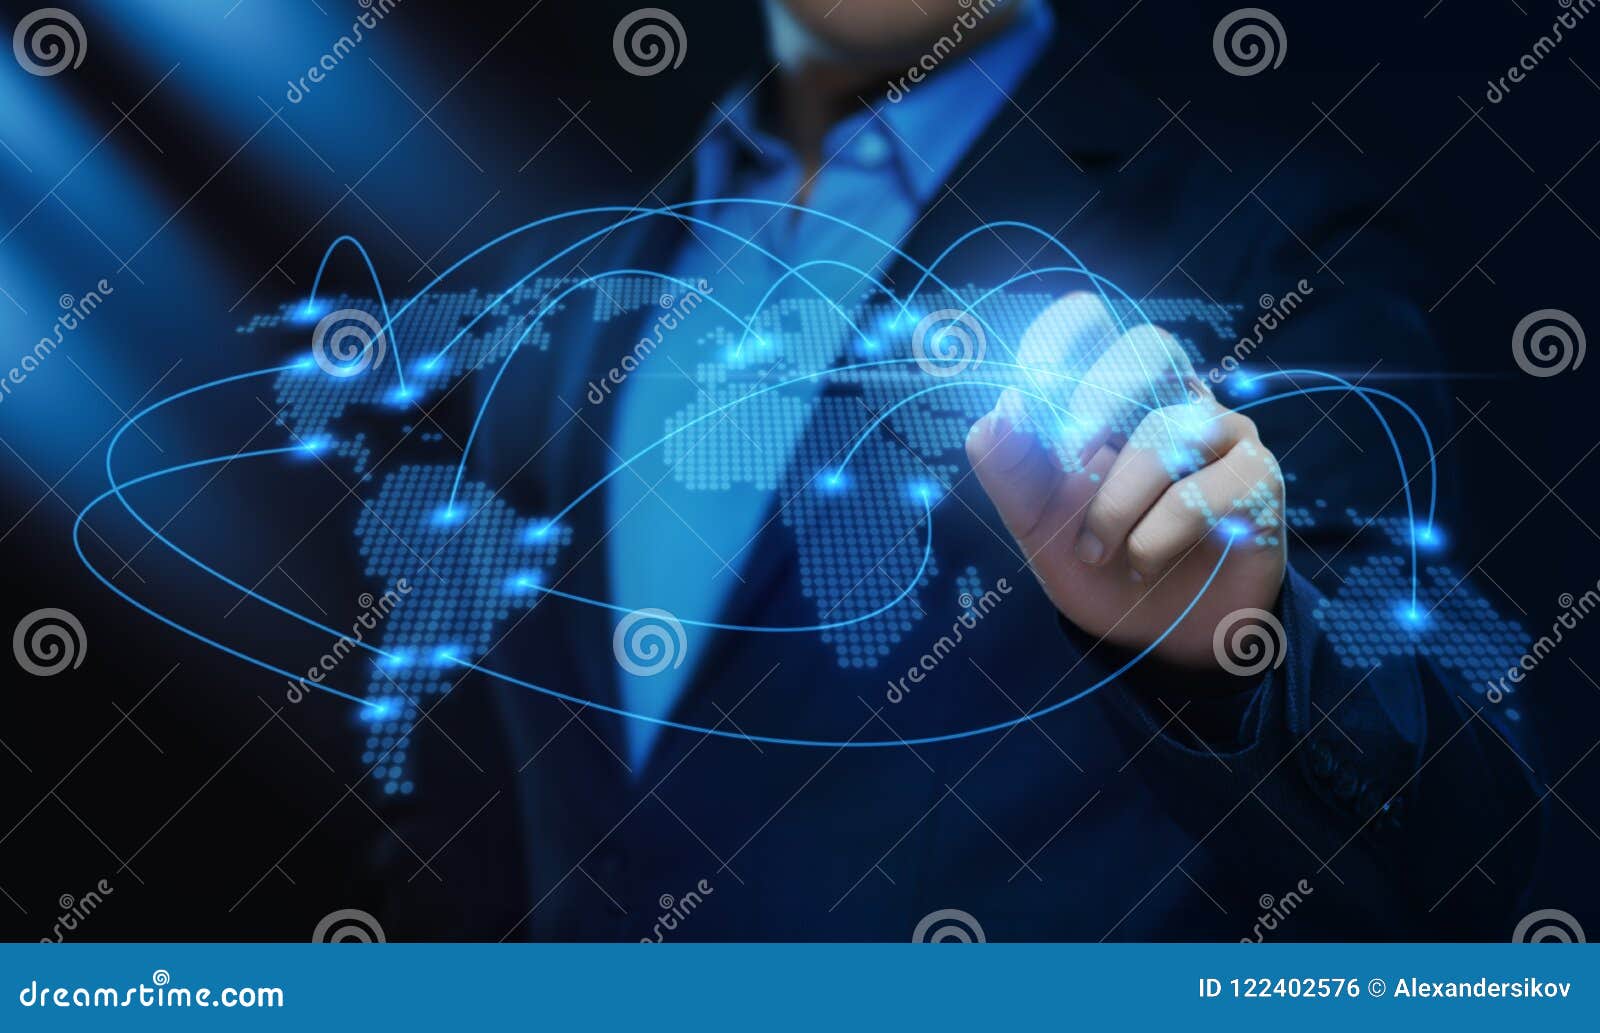 global world communication connection business network internet techology concept